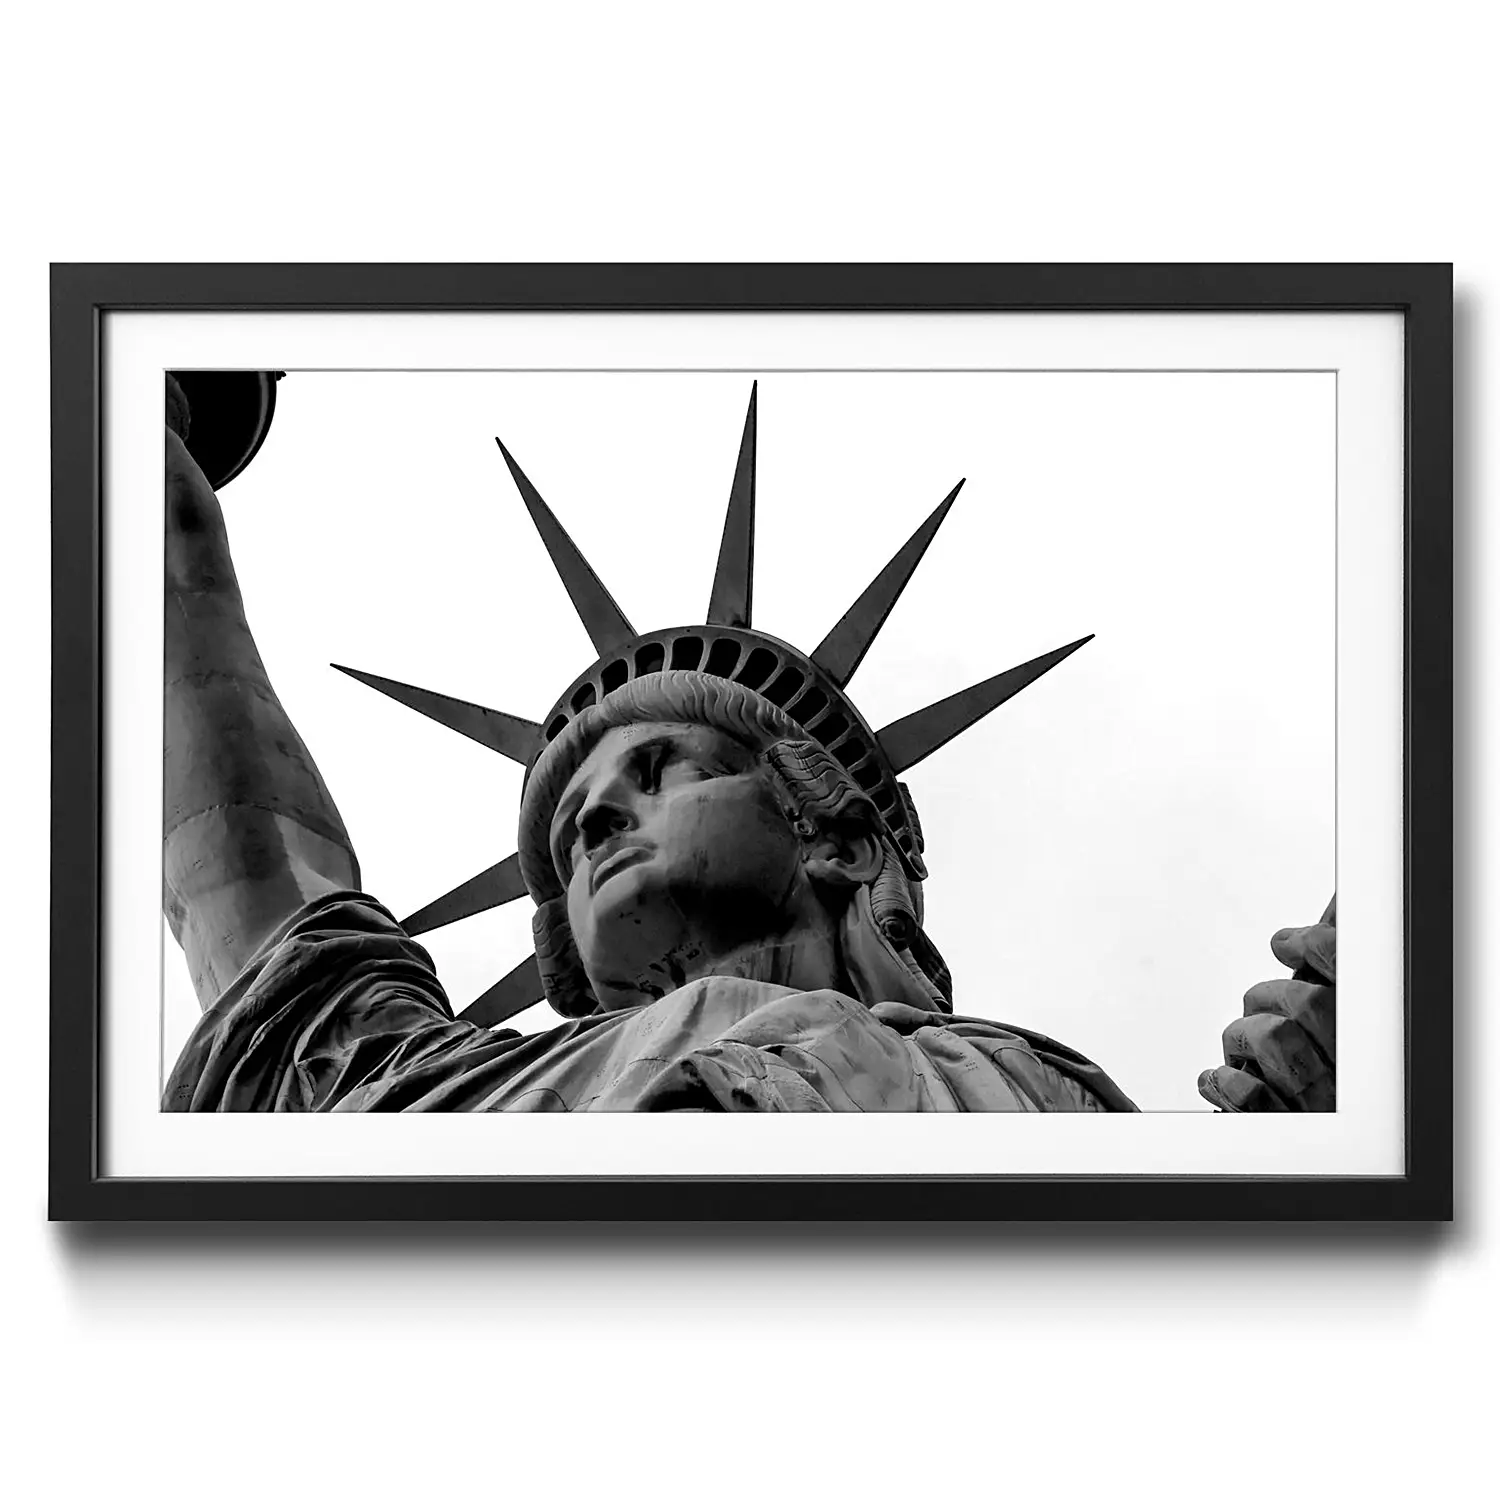 Gerahmtes Bild Liberty of Statue